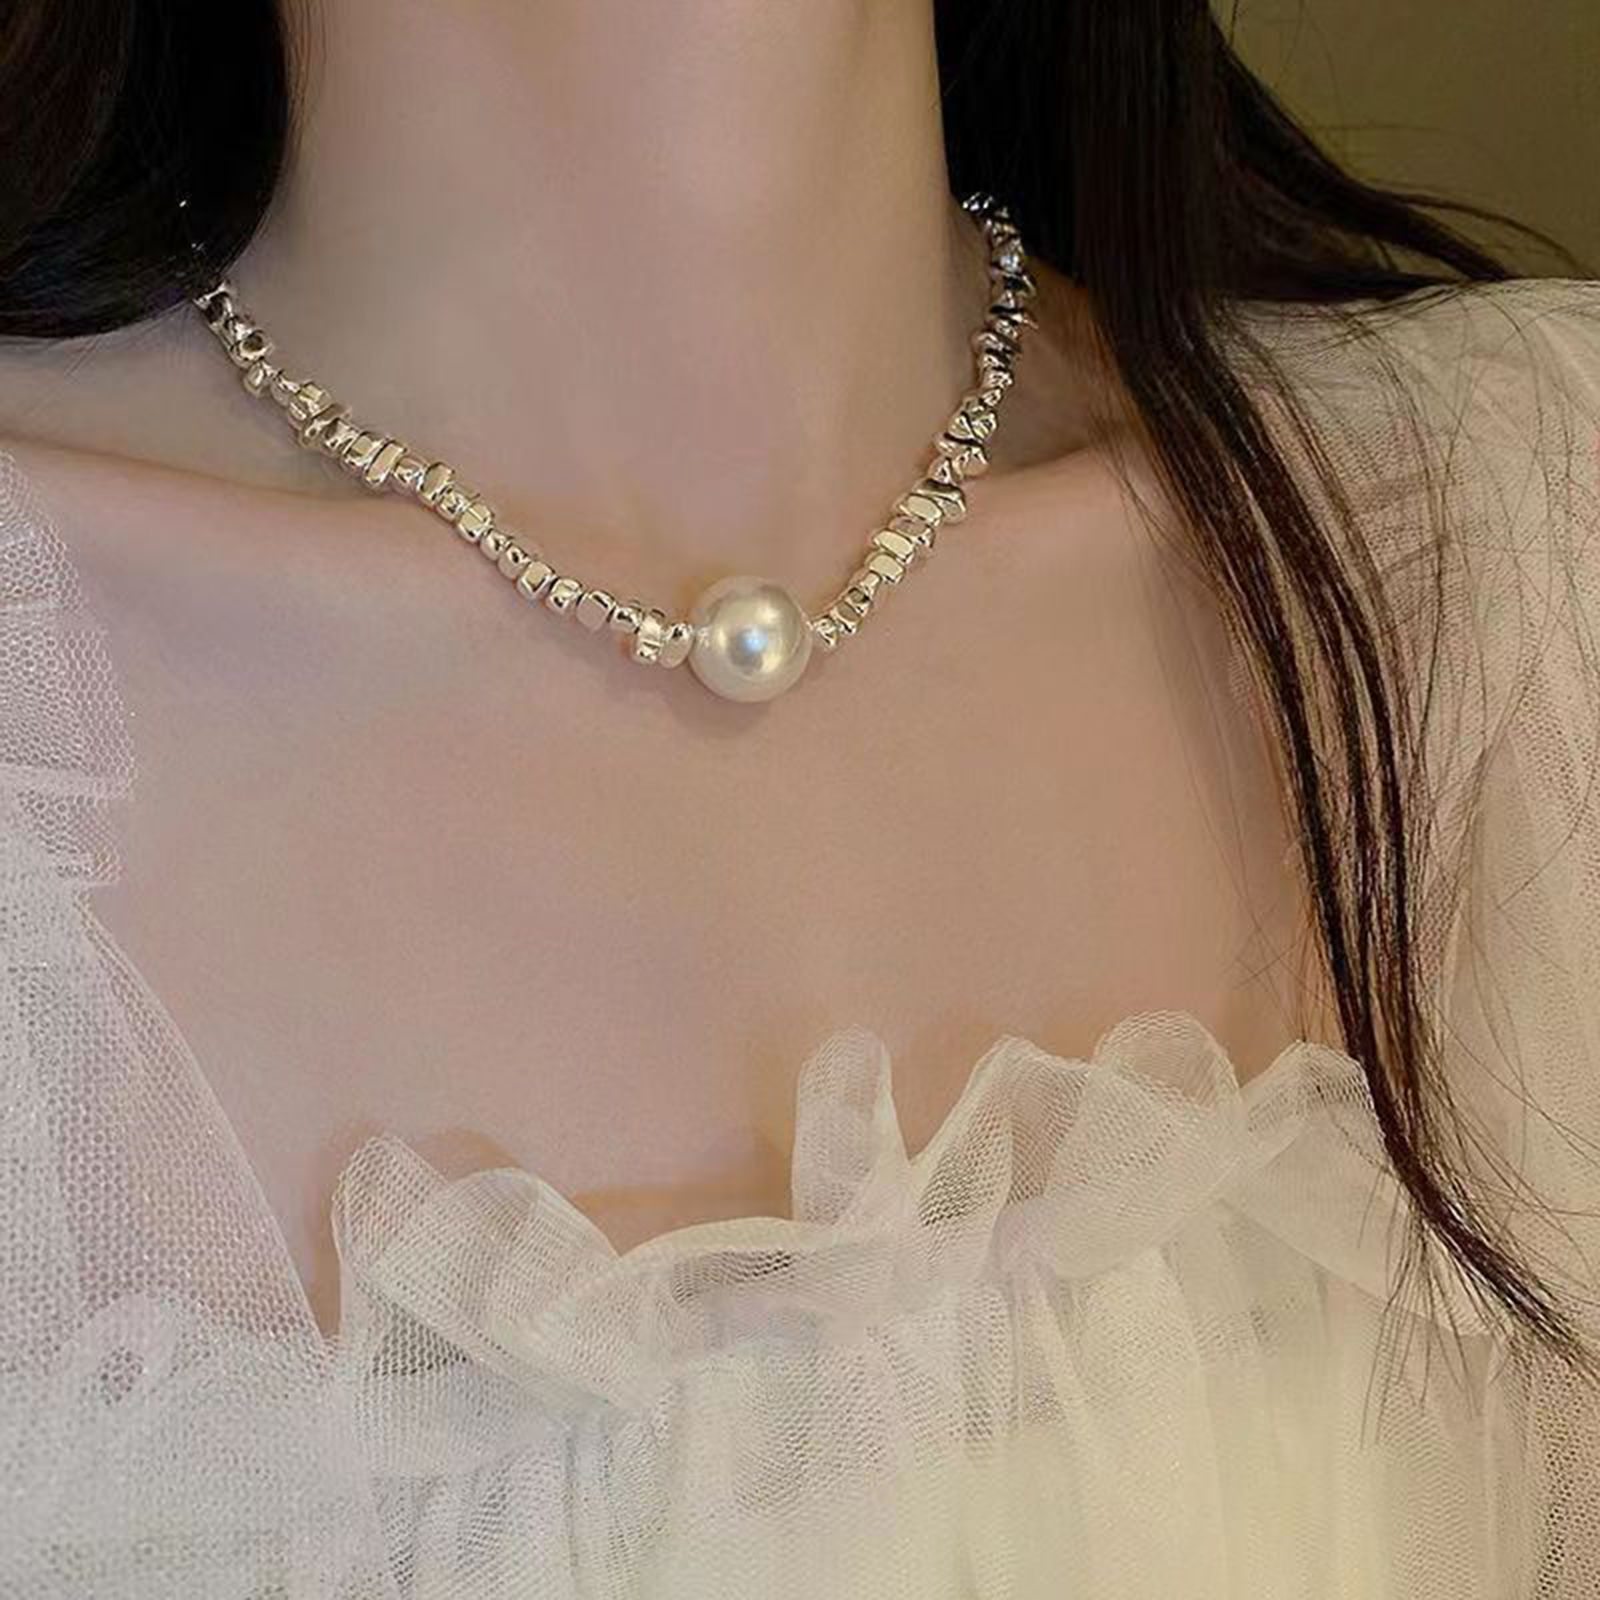 Bild von Stilvoll Perlenkette Versilbert Imitat Perle 1 Strang